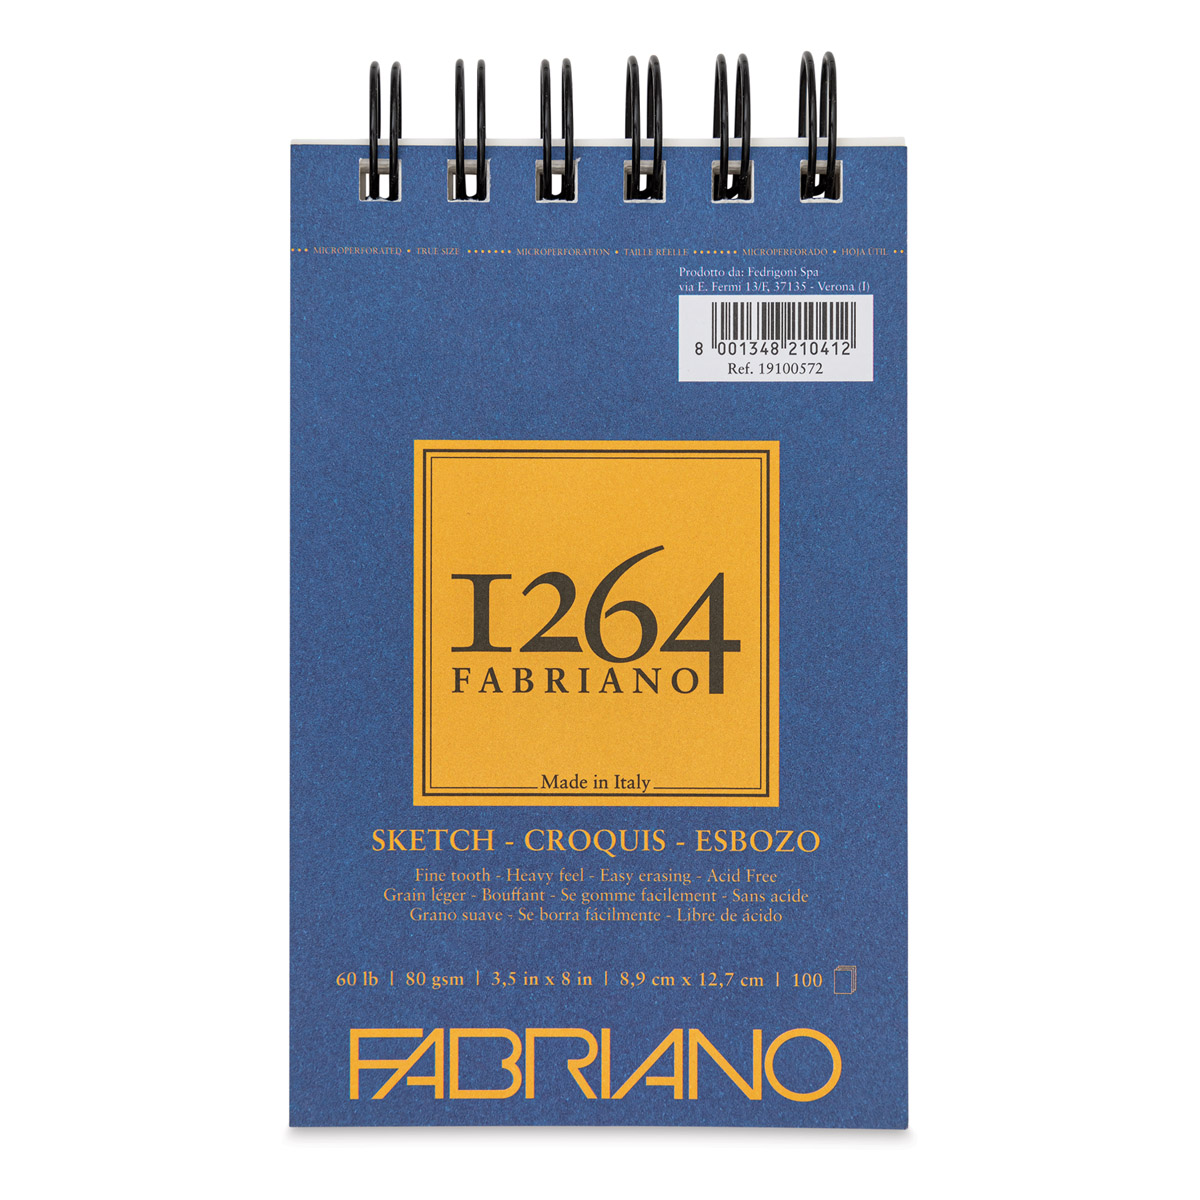 Fabriano 1264 Sketch Pads  BLICK Art Materials